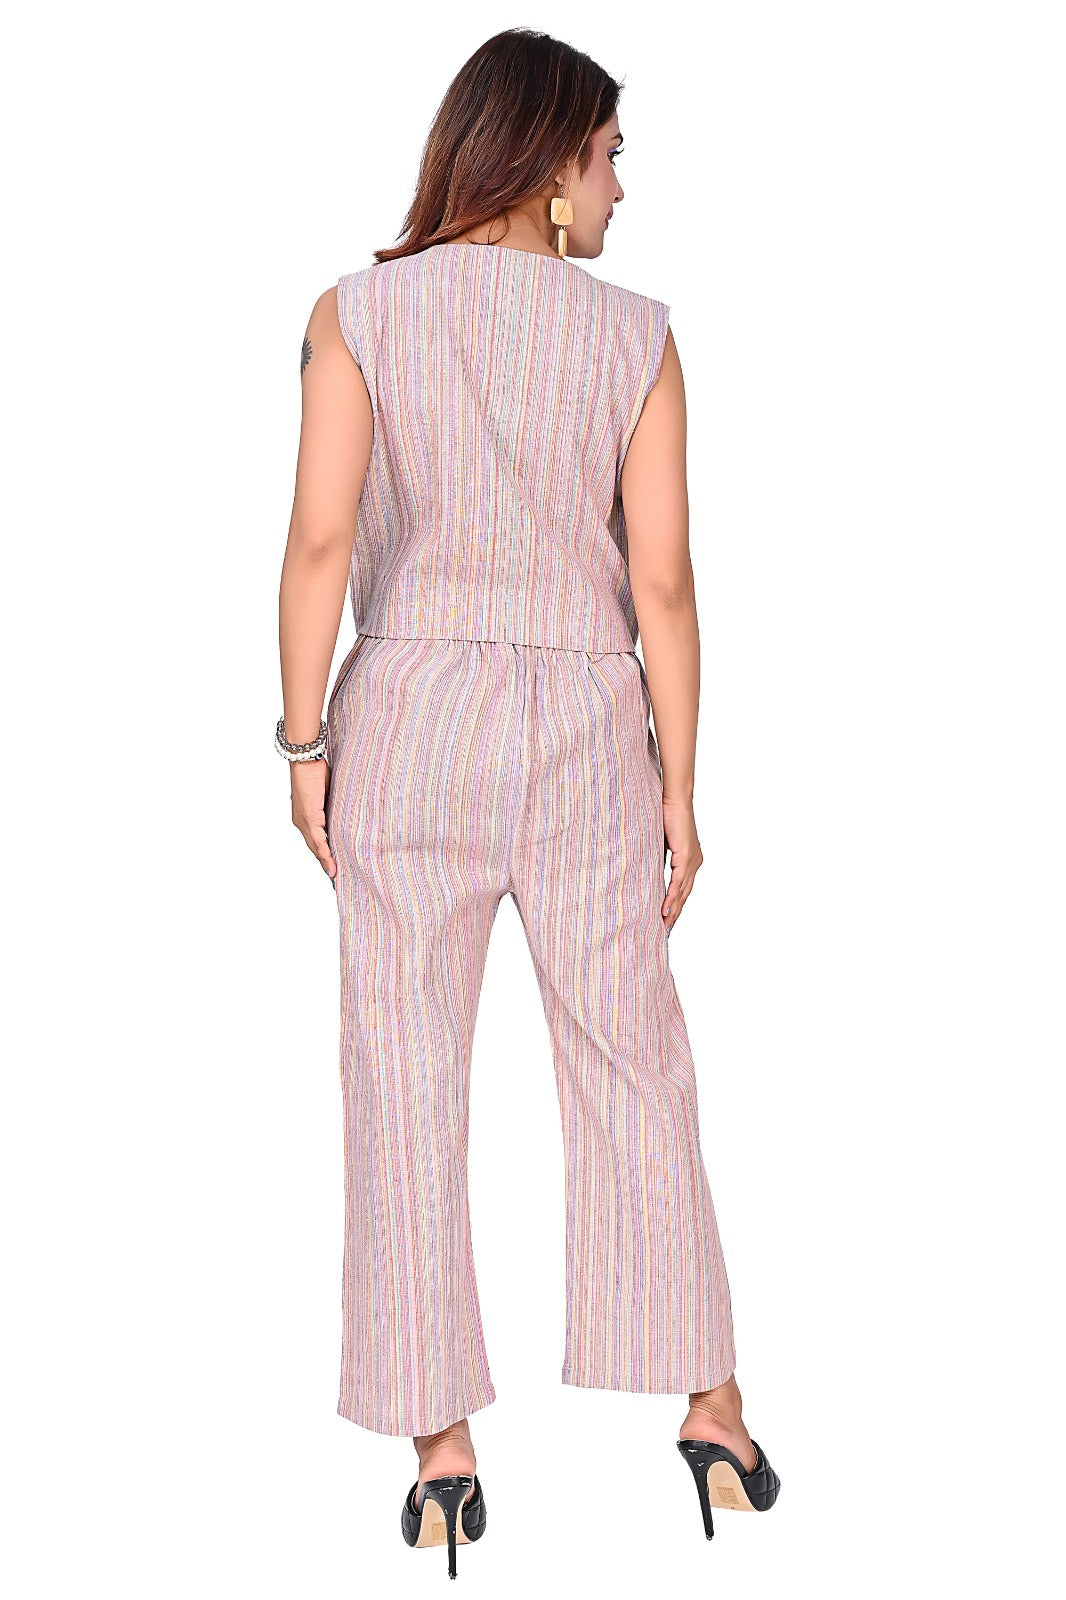 Nirmal online Premium Cotton Stripe co-ord set for Women in purple Colour